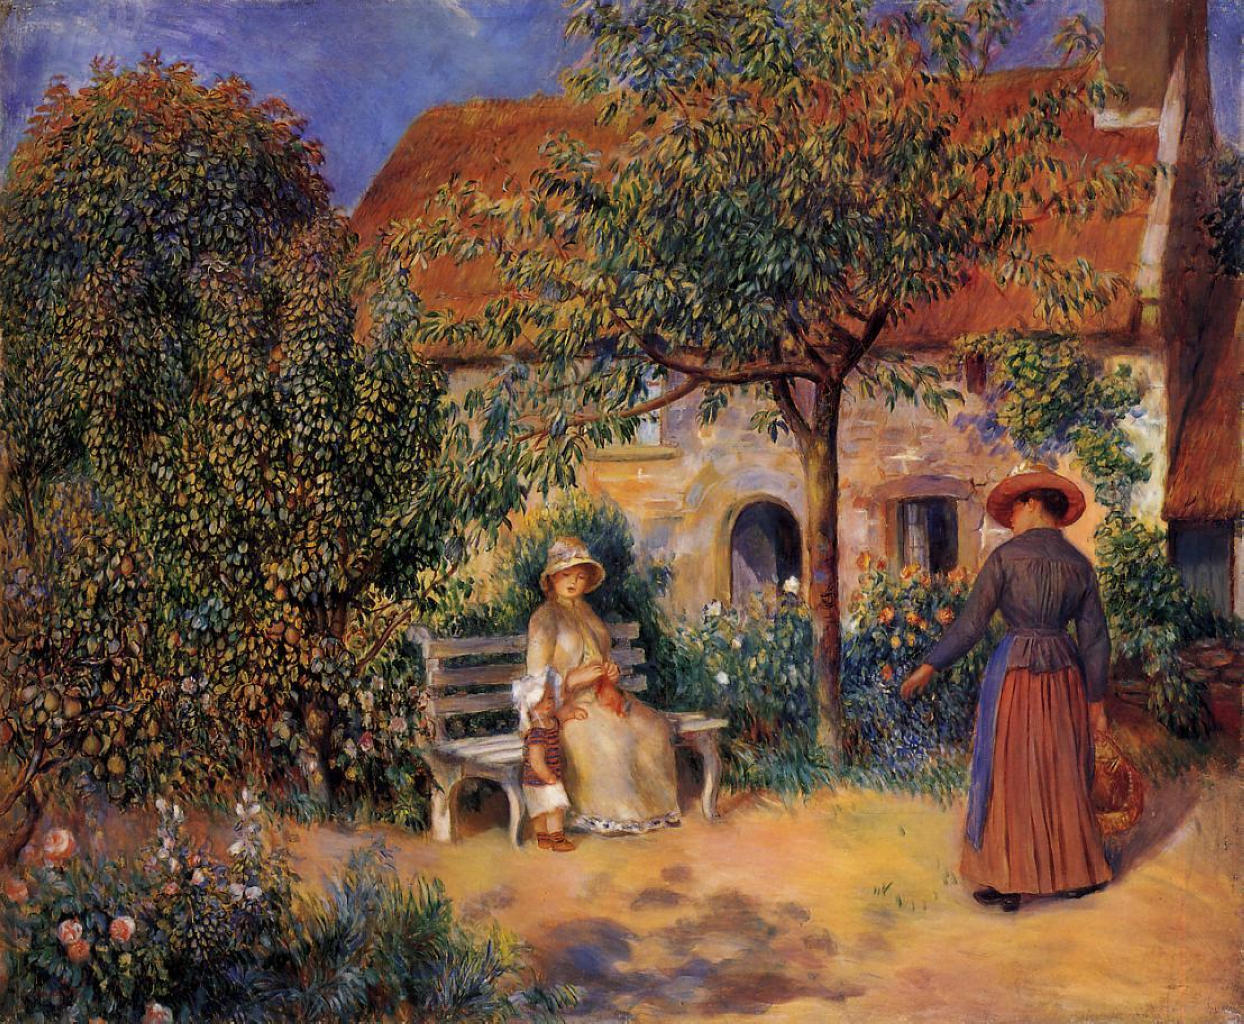 Garden Scene in Brittany - Pierre-Auguste Renoir painting on canvas